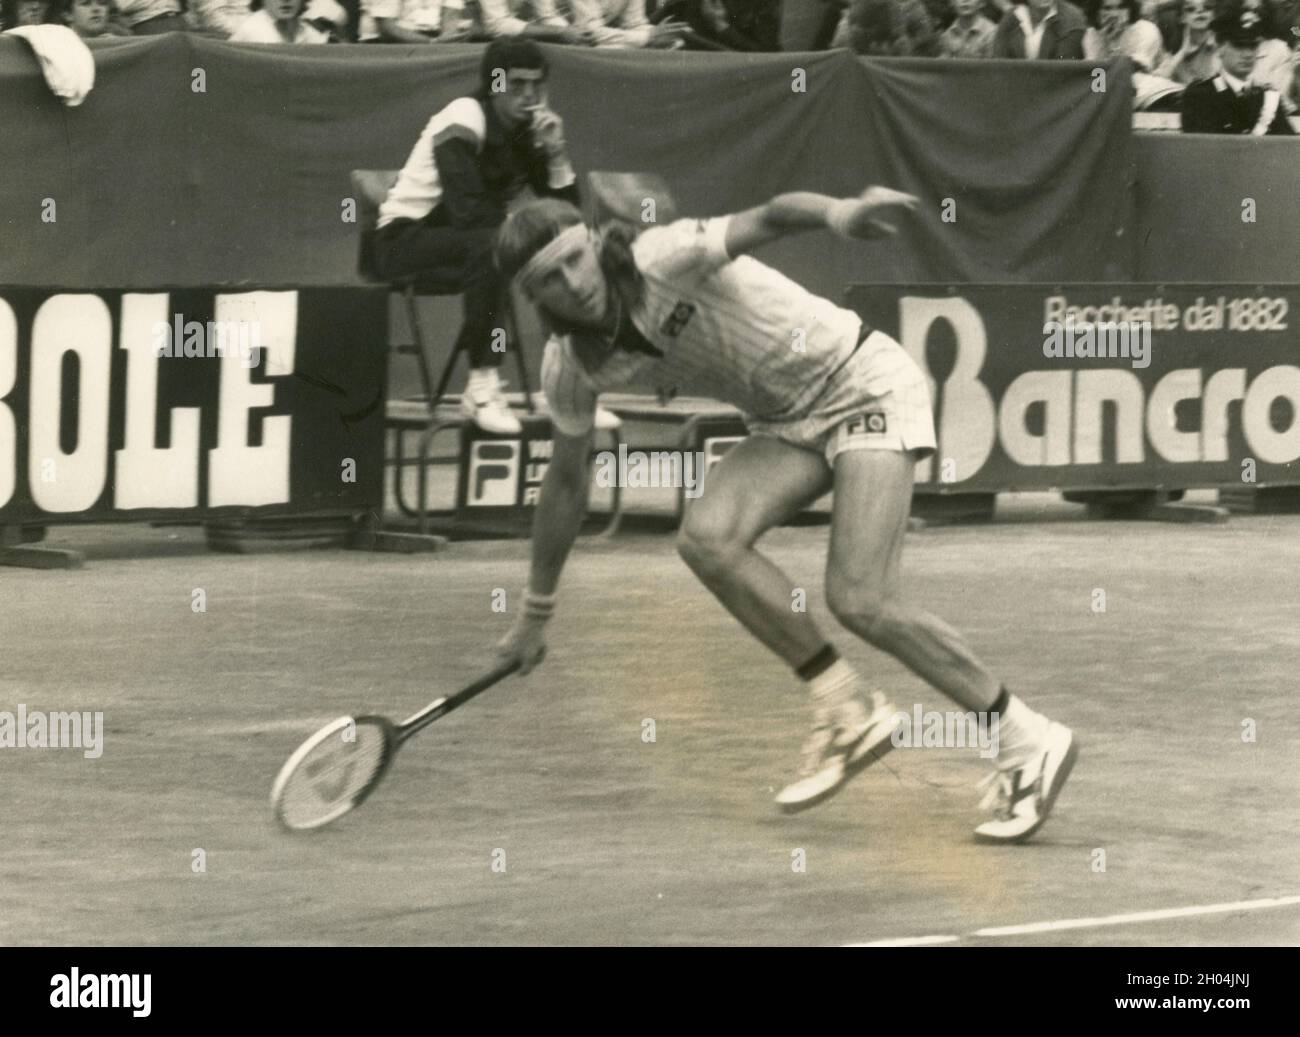 Swedish tennis player Bjorn Borg, 1993 Stock Photo - Alamy